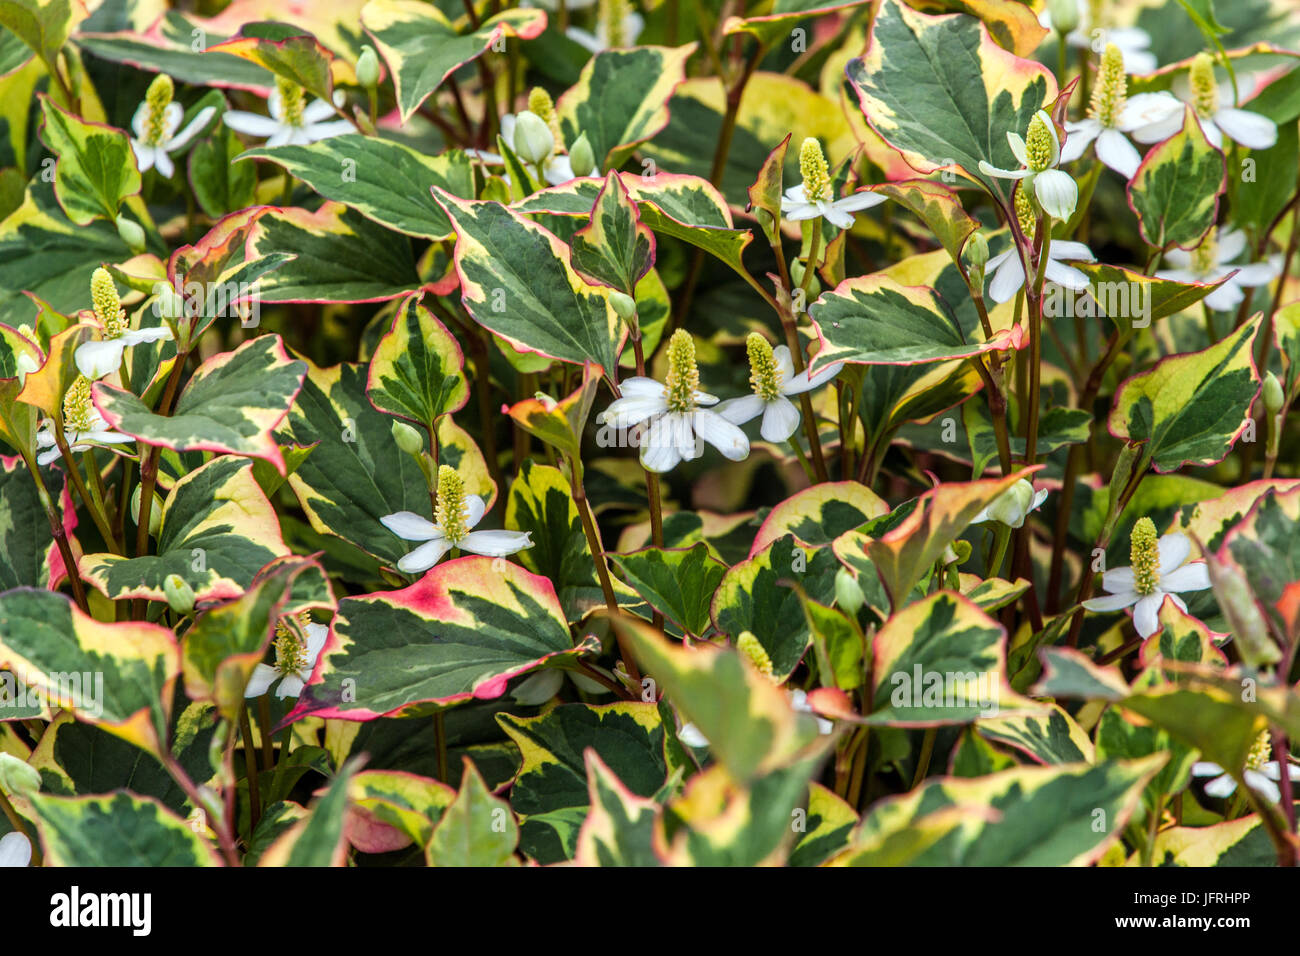 Chameleon Plant, Houttuynia cordata, flowering Stock Photo